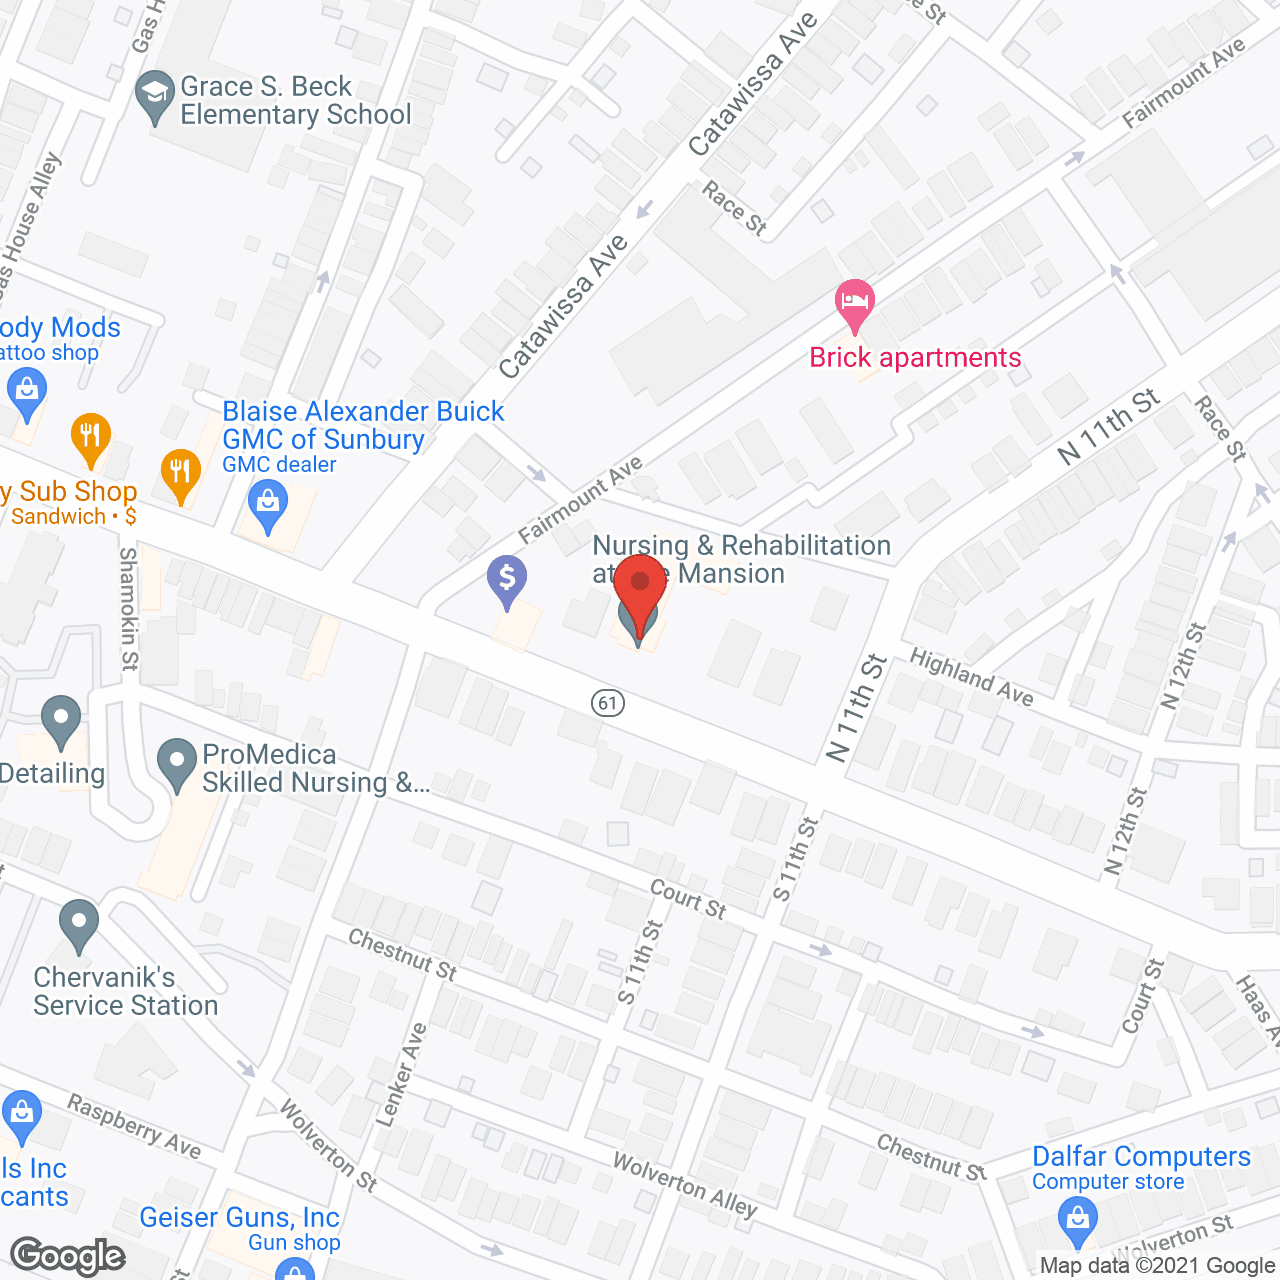 Golden LivingCenter - Mansion in google map